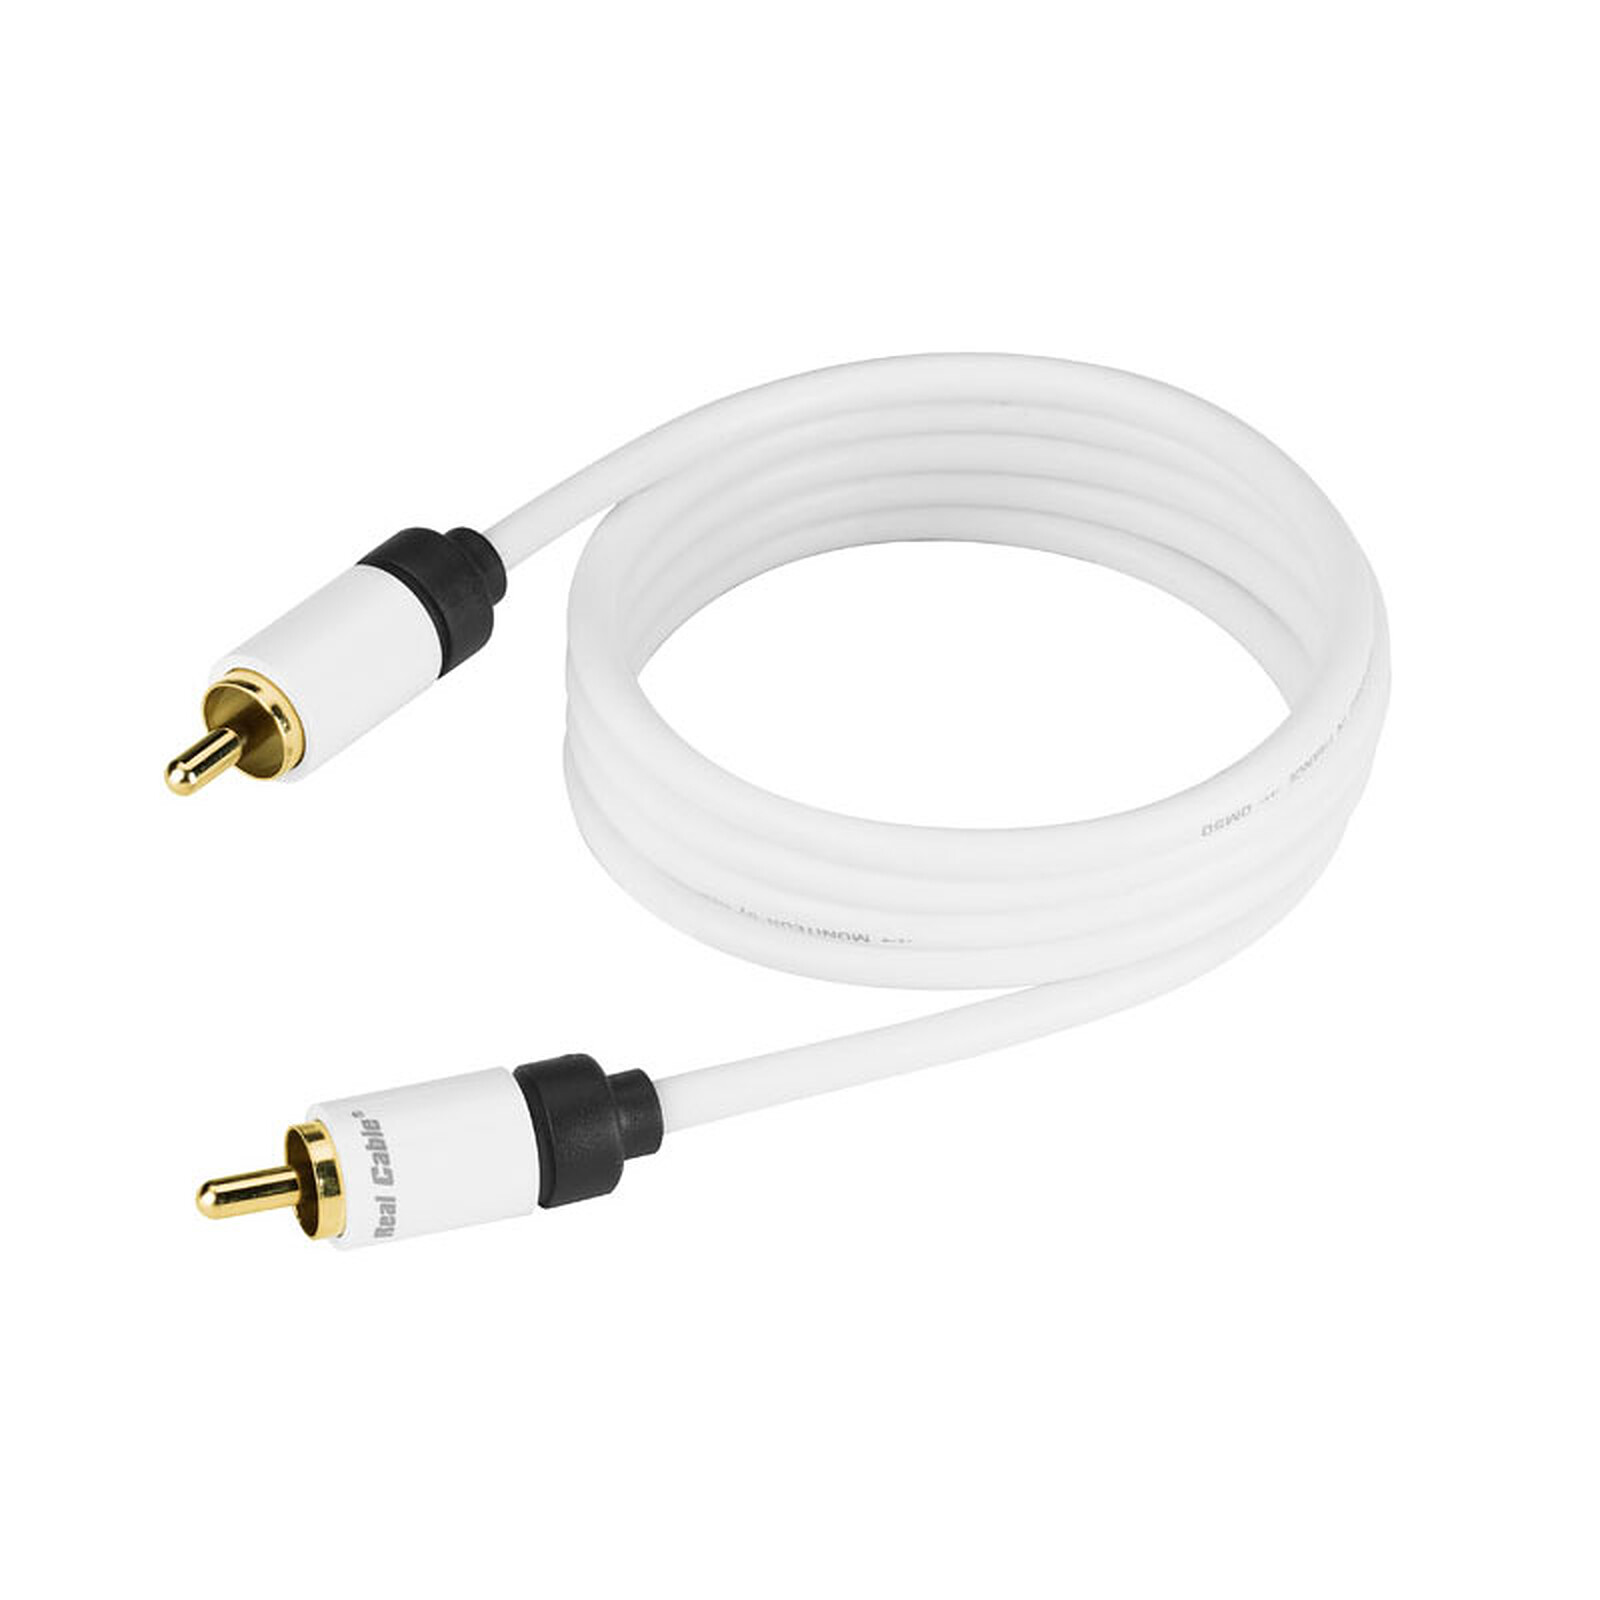 Real Cable SUB-1 2m - Câble audio RCA - Garantie 3 ans LDLC